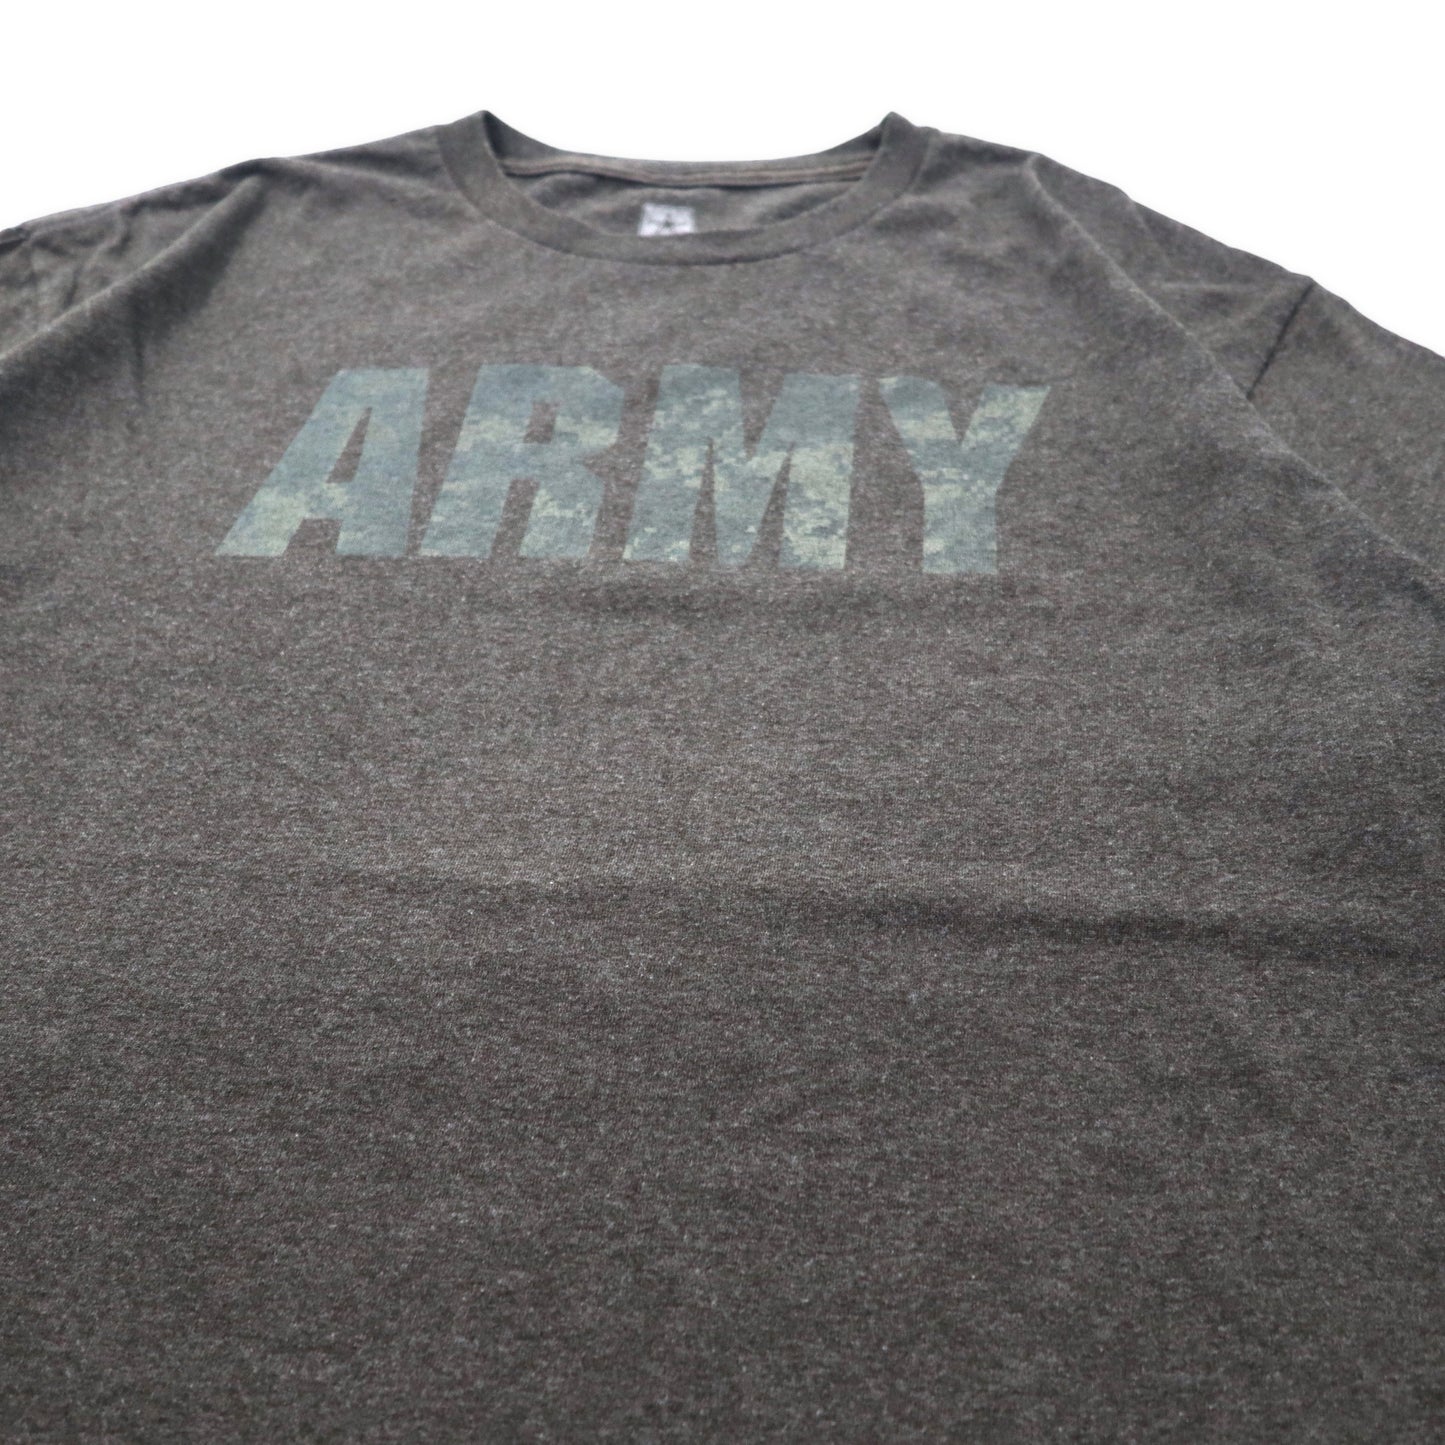 US ARMY トレーニングTシャツ XL グレー コットン ミリタリー ビッグサイズ